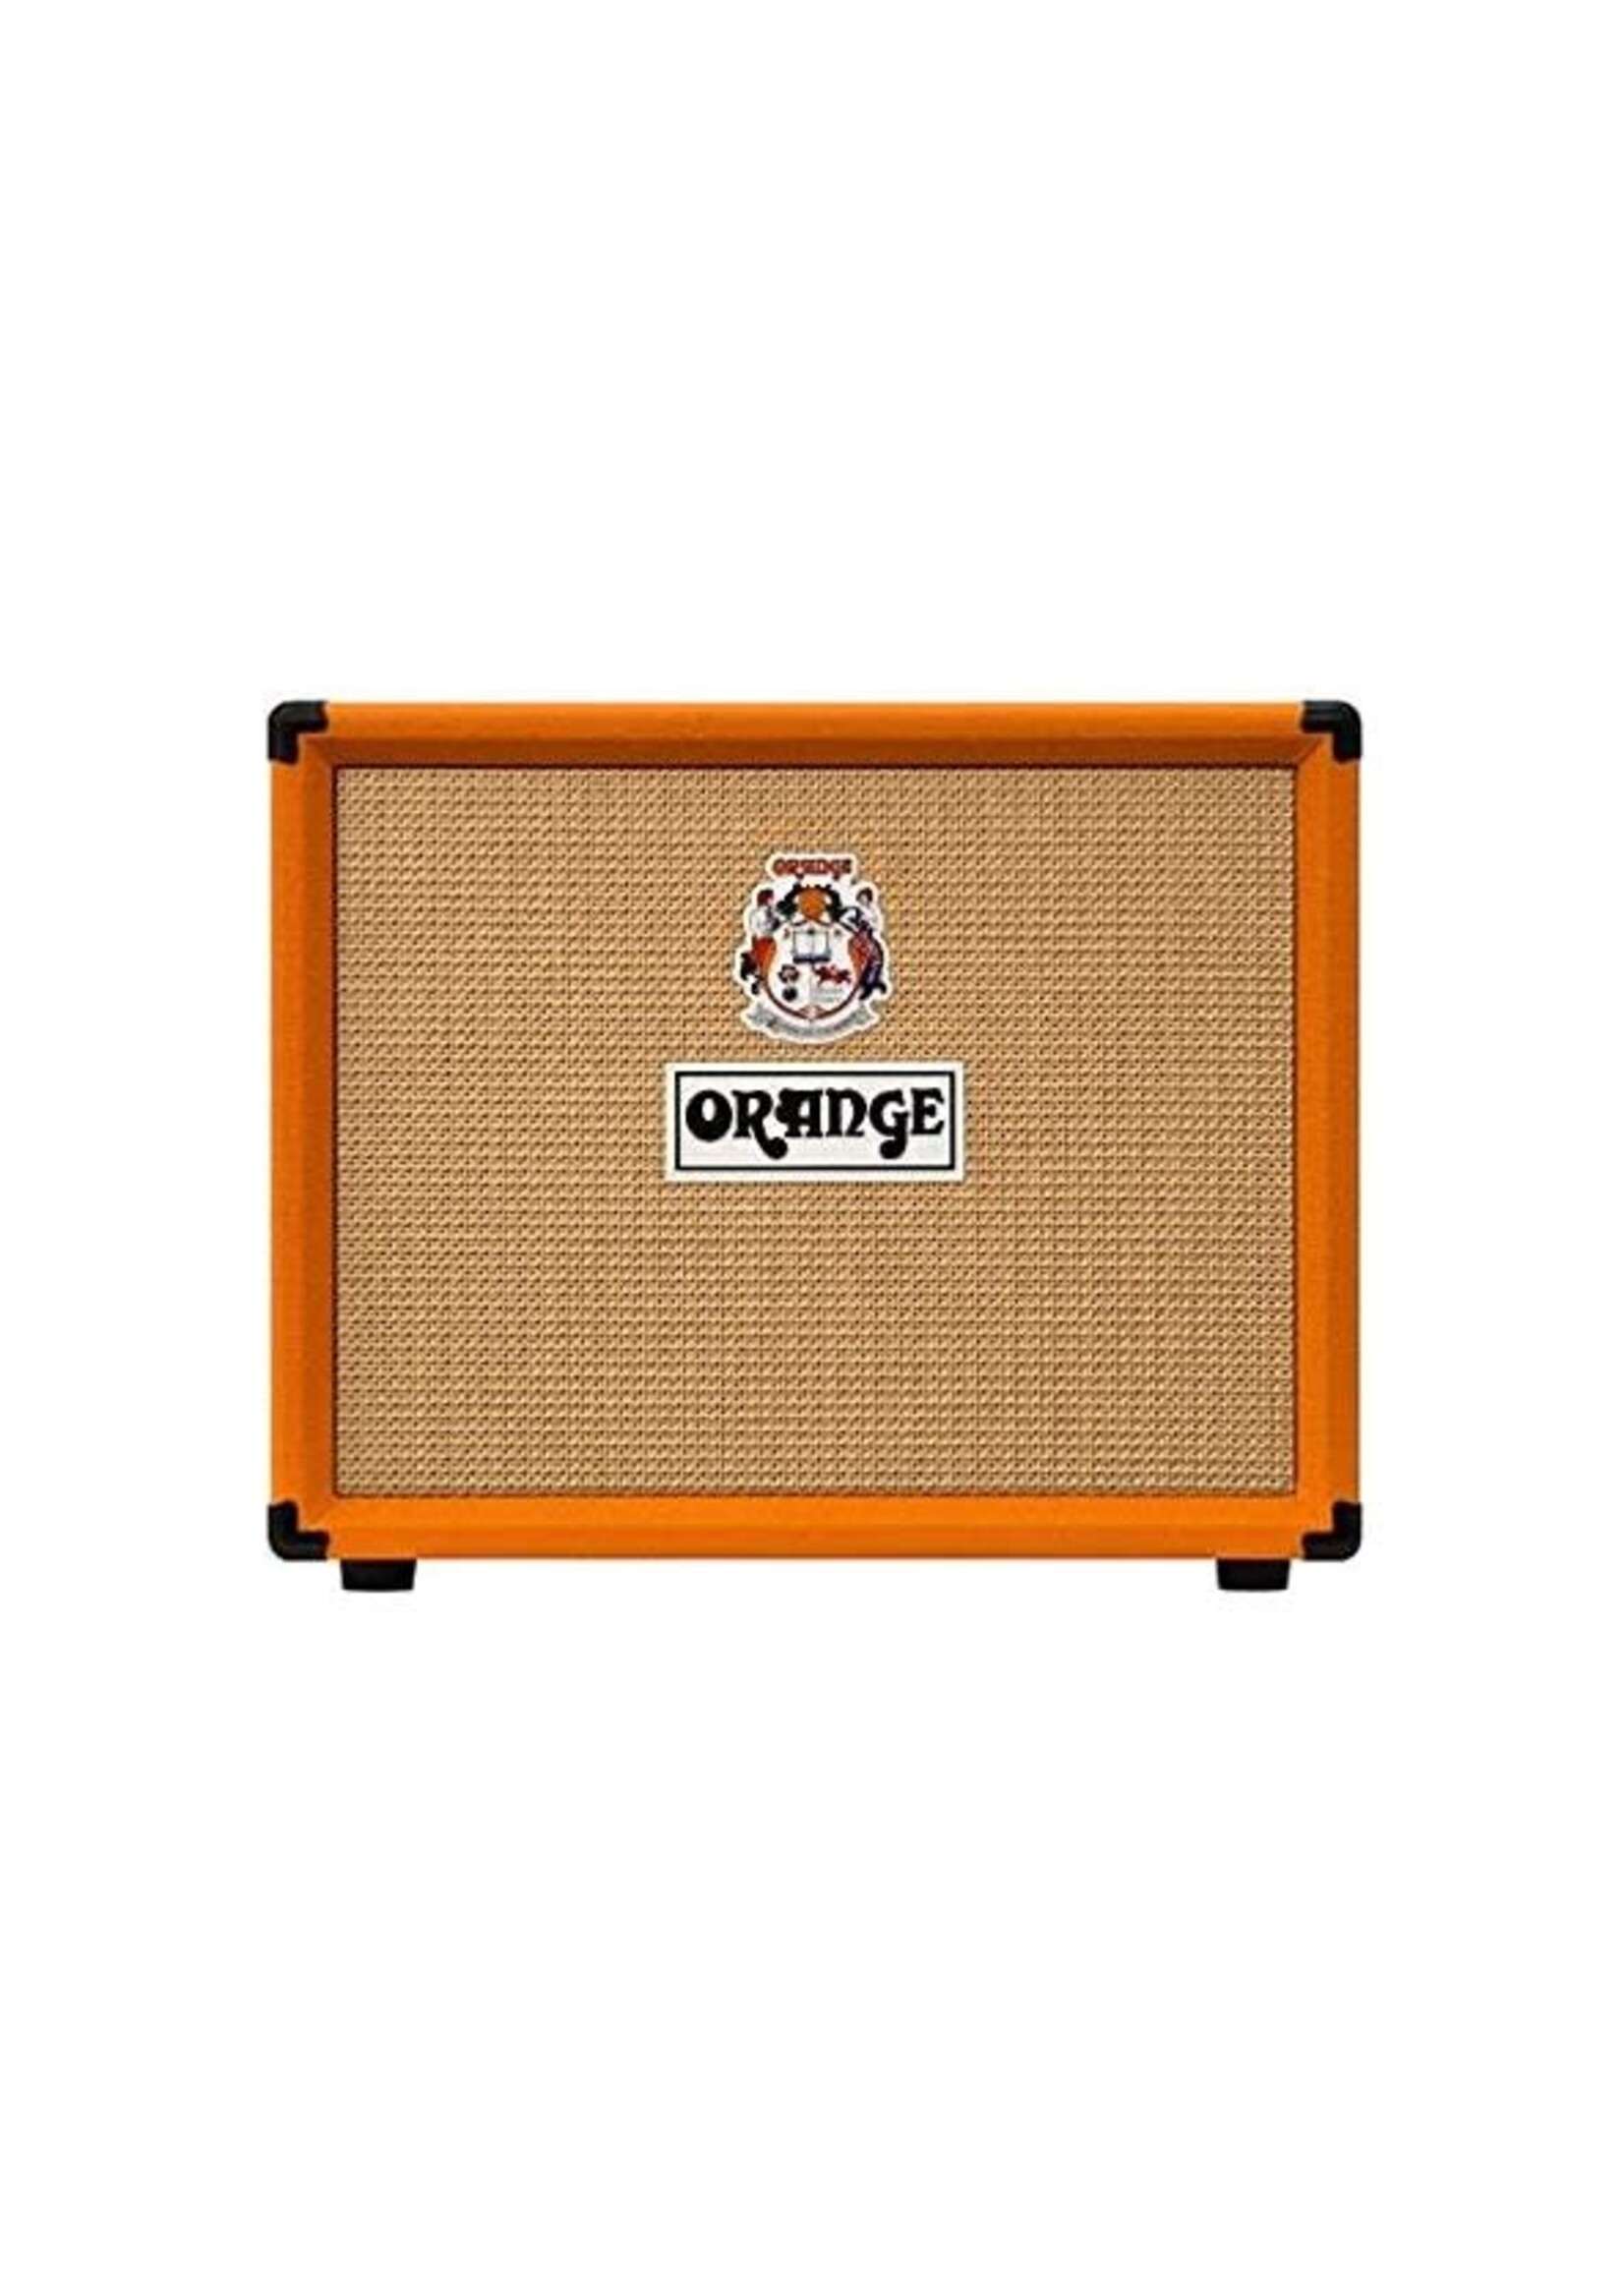 Orange Orange Super Crush 100W Combo Amp